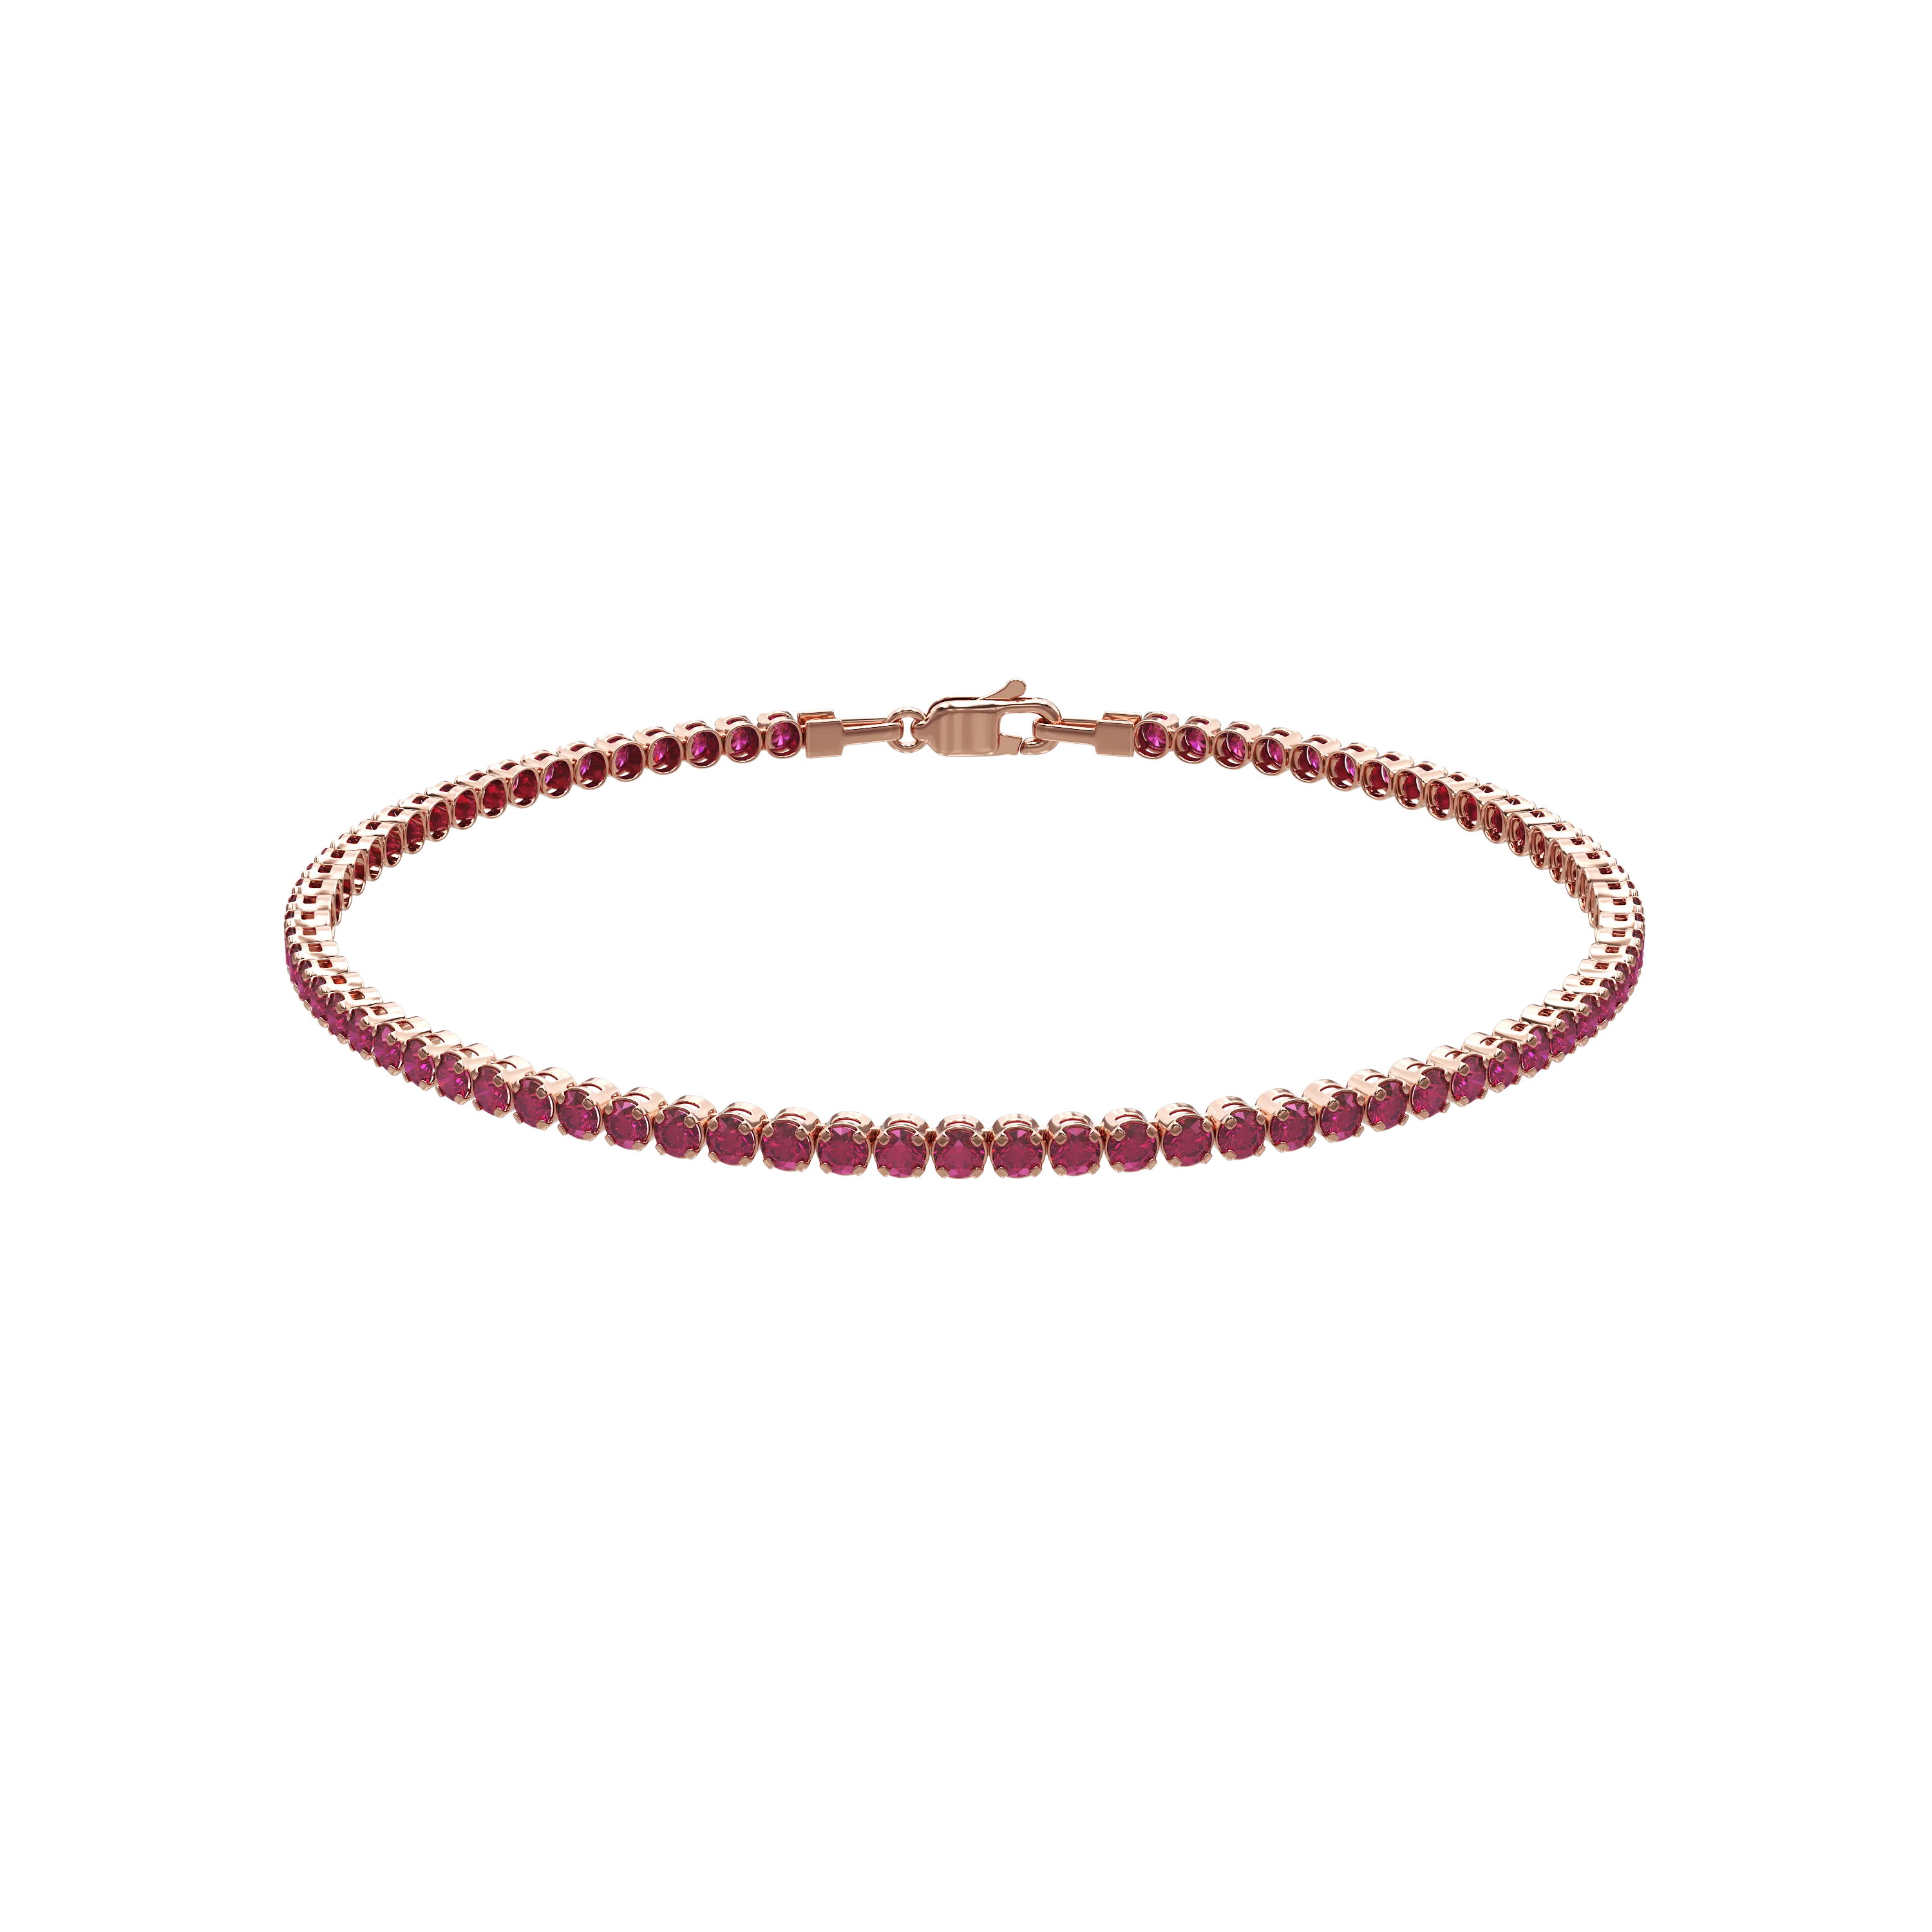 Rose gold tennis bracelet with pink zirconia